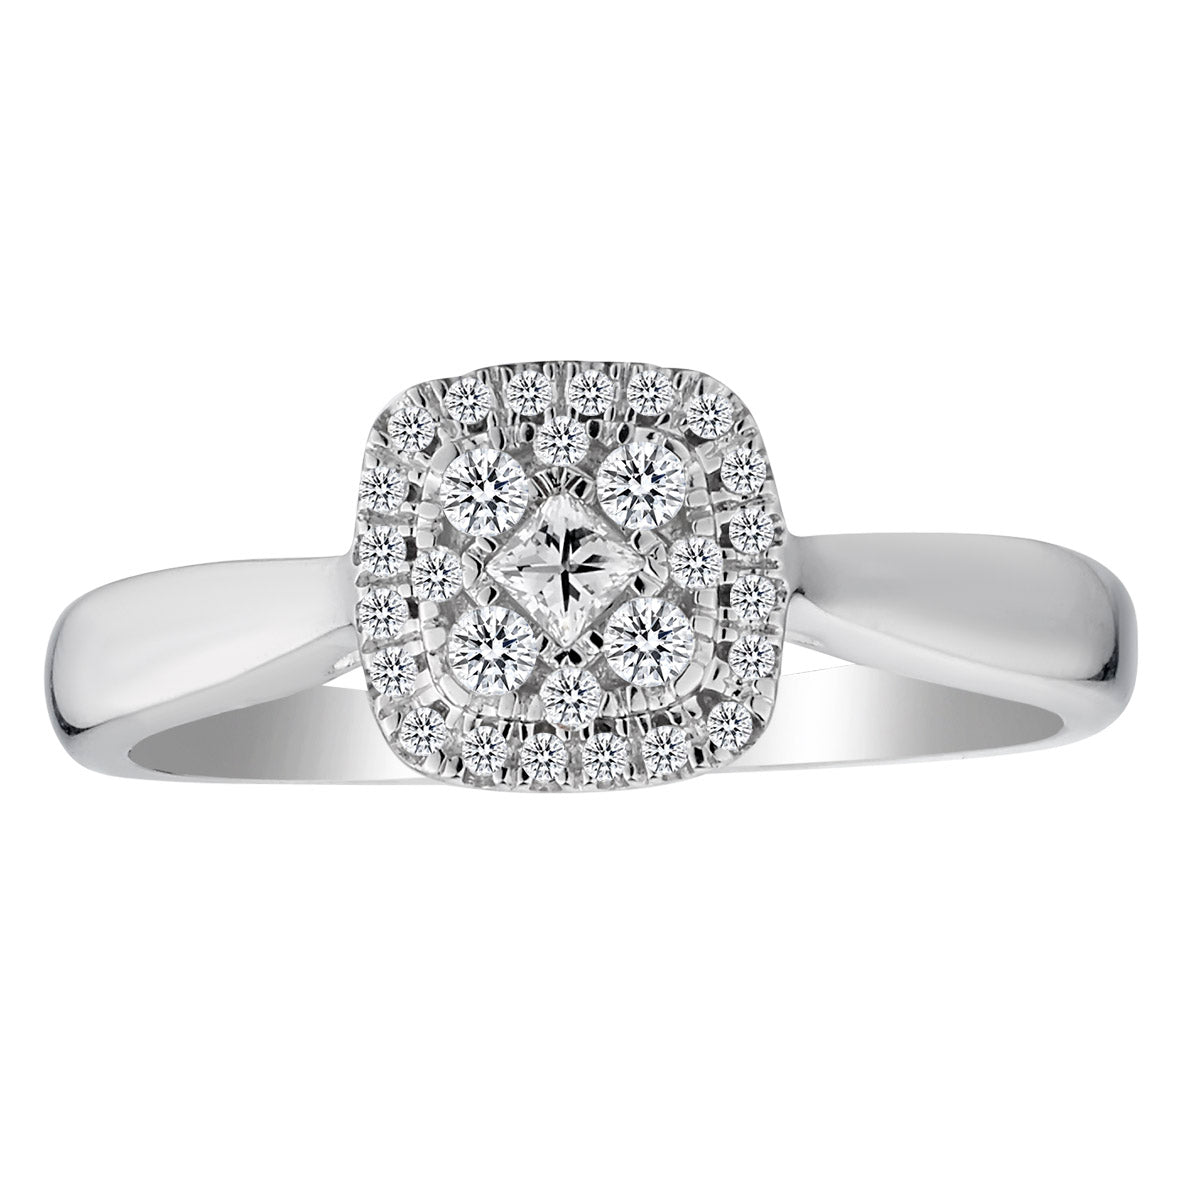 .25 Carat Diamond Ring, 14kt White Gold......................NOW